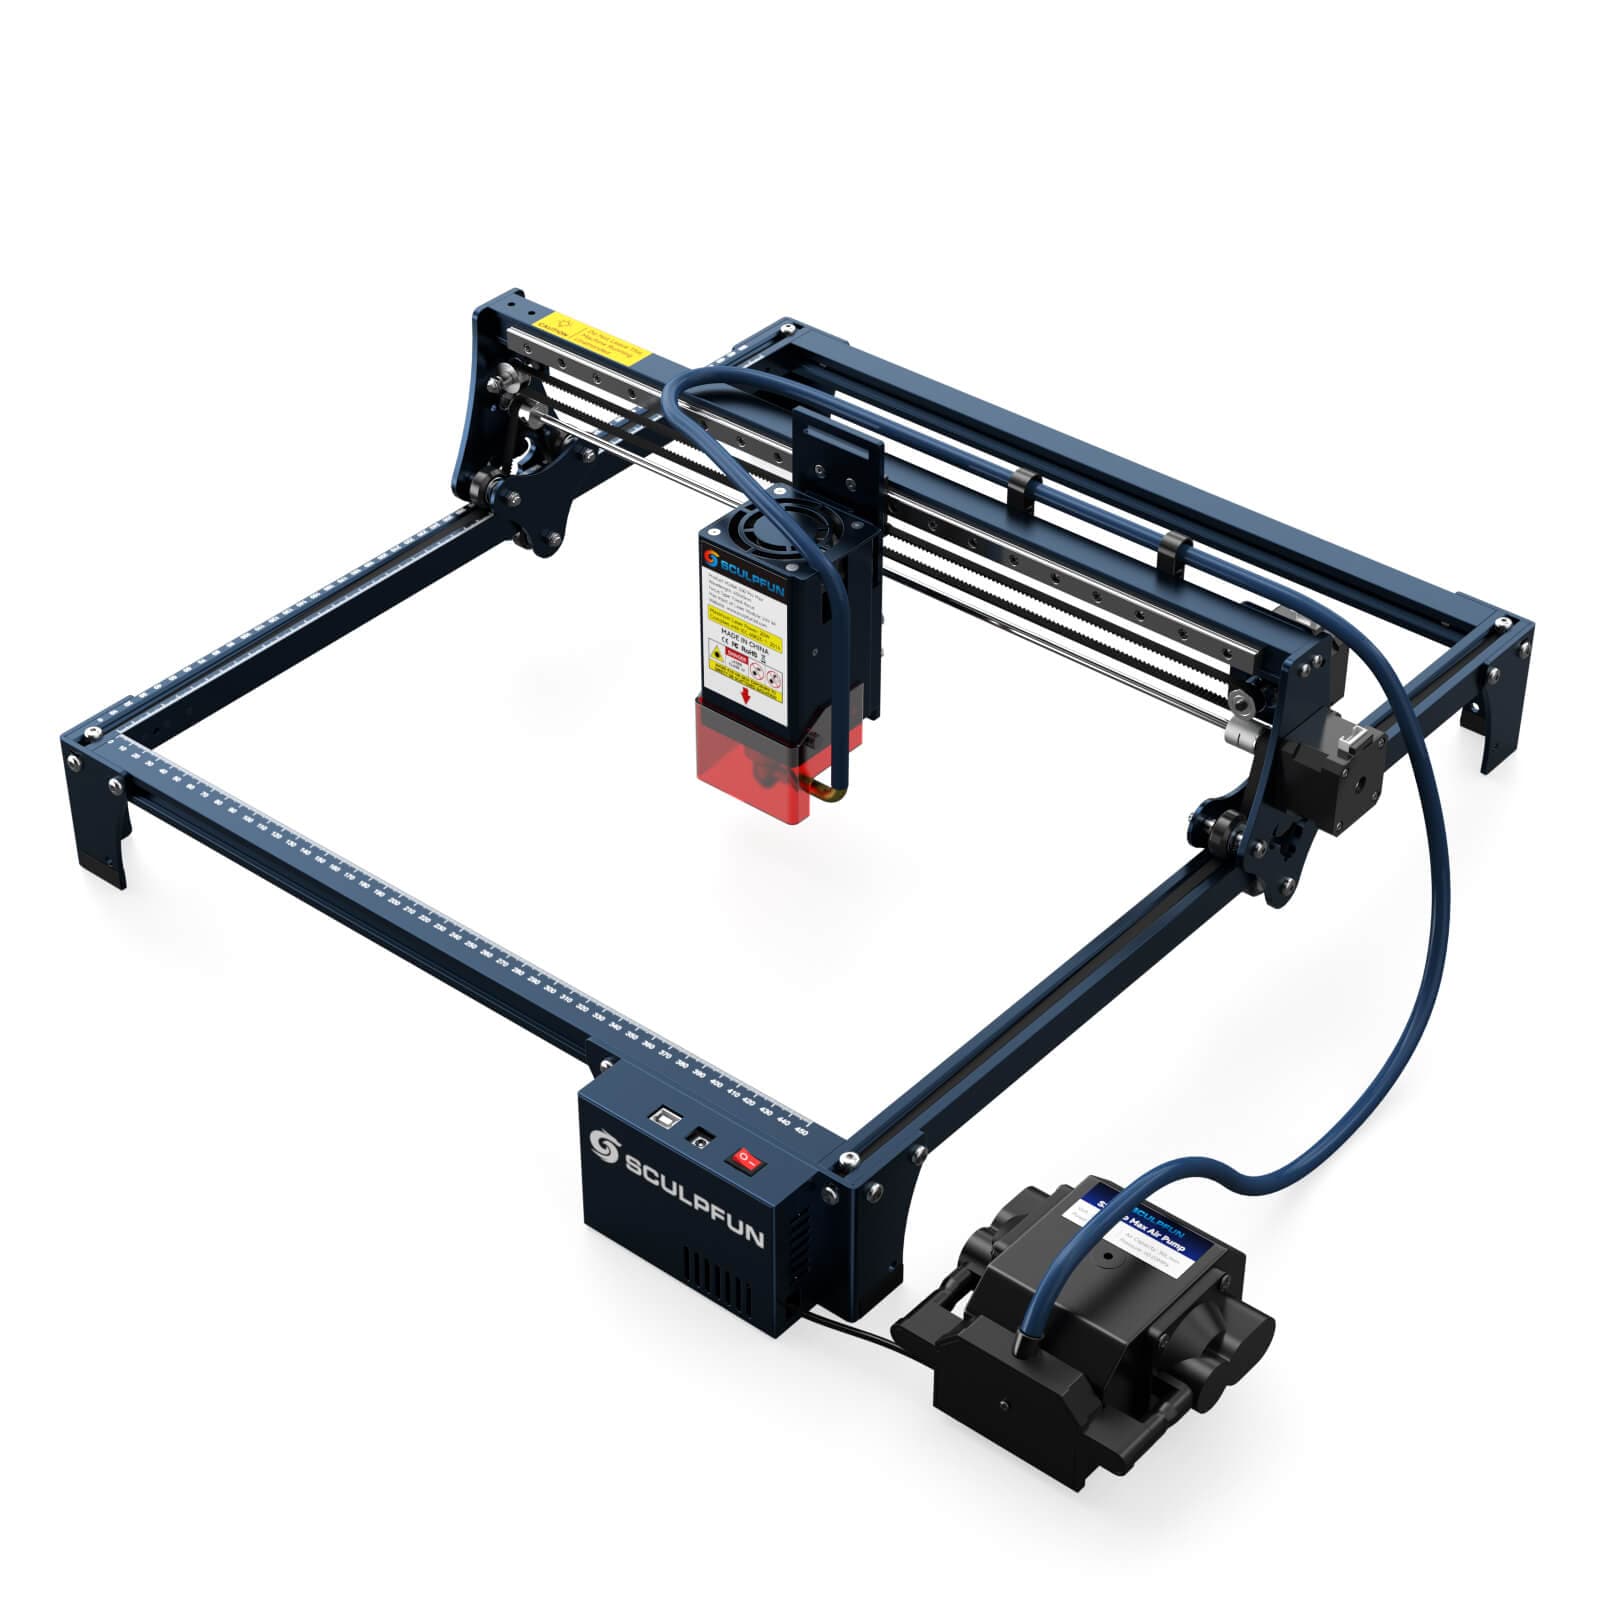 SCULPFUN S30 Pro Max  Automatic Air-assist Laser Engraver Machine 20W